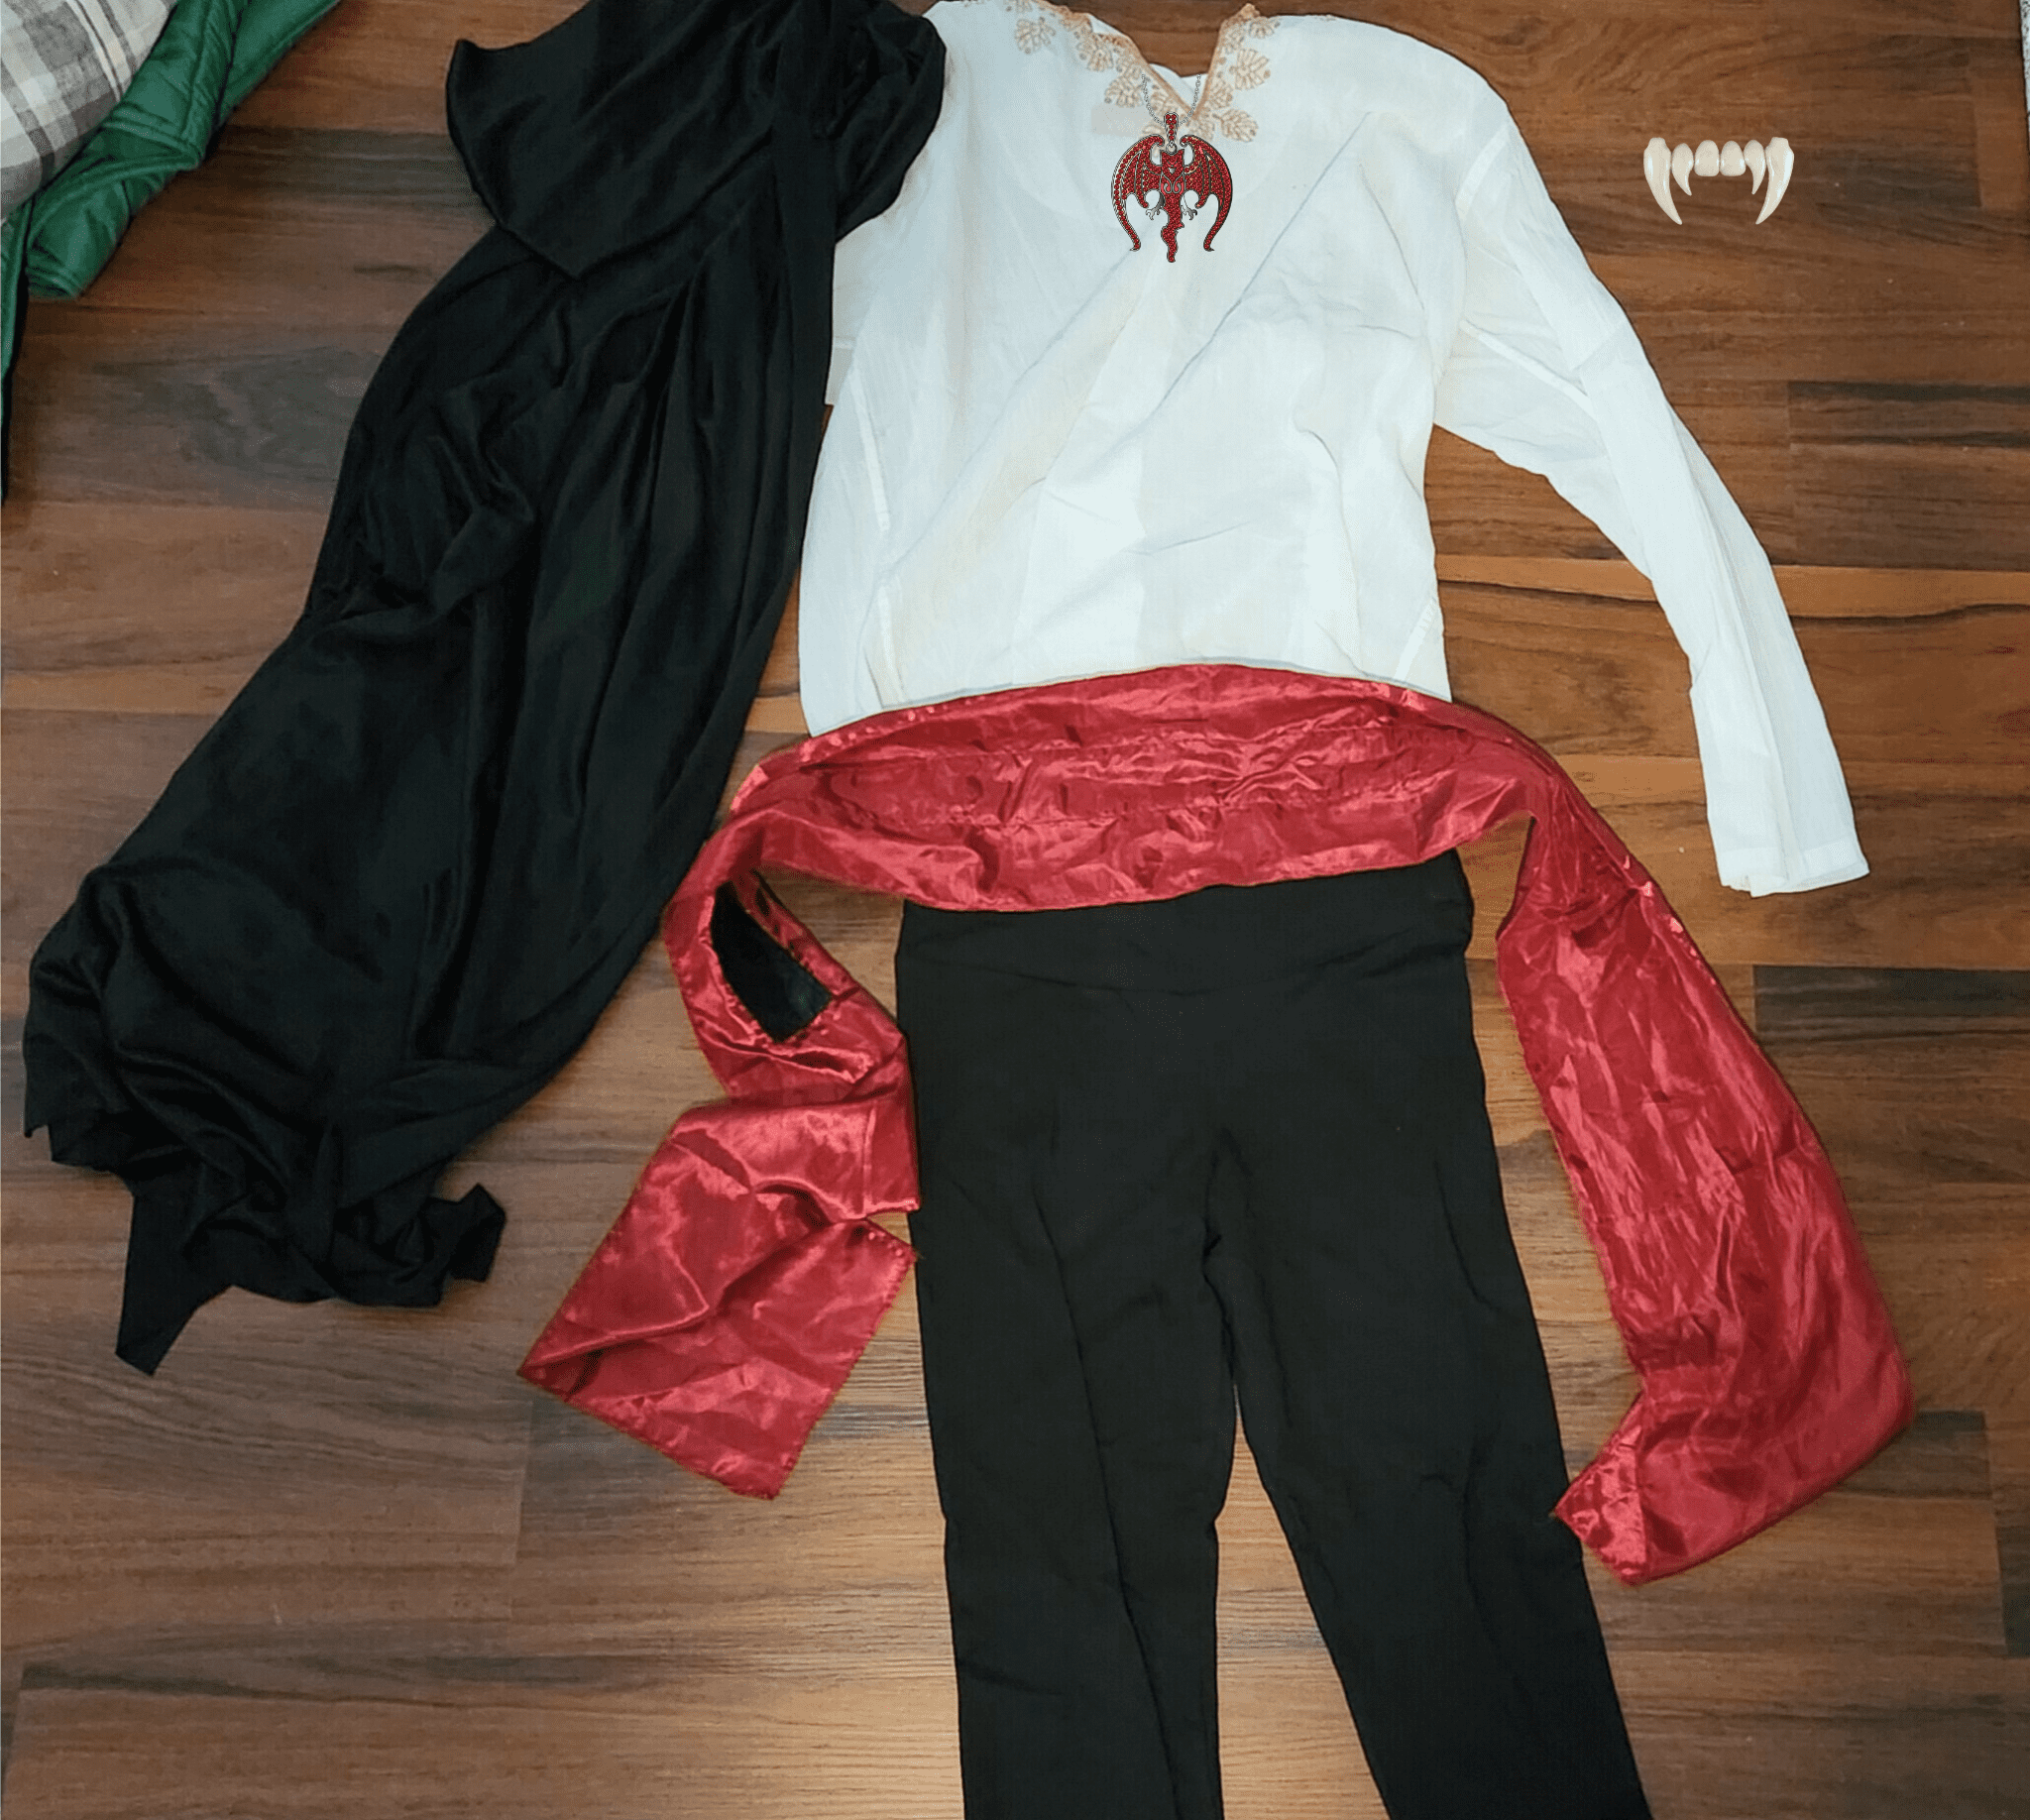 Thrifted Goodwill Vampire costume